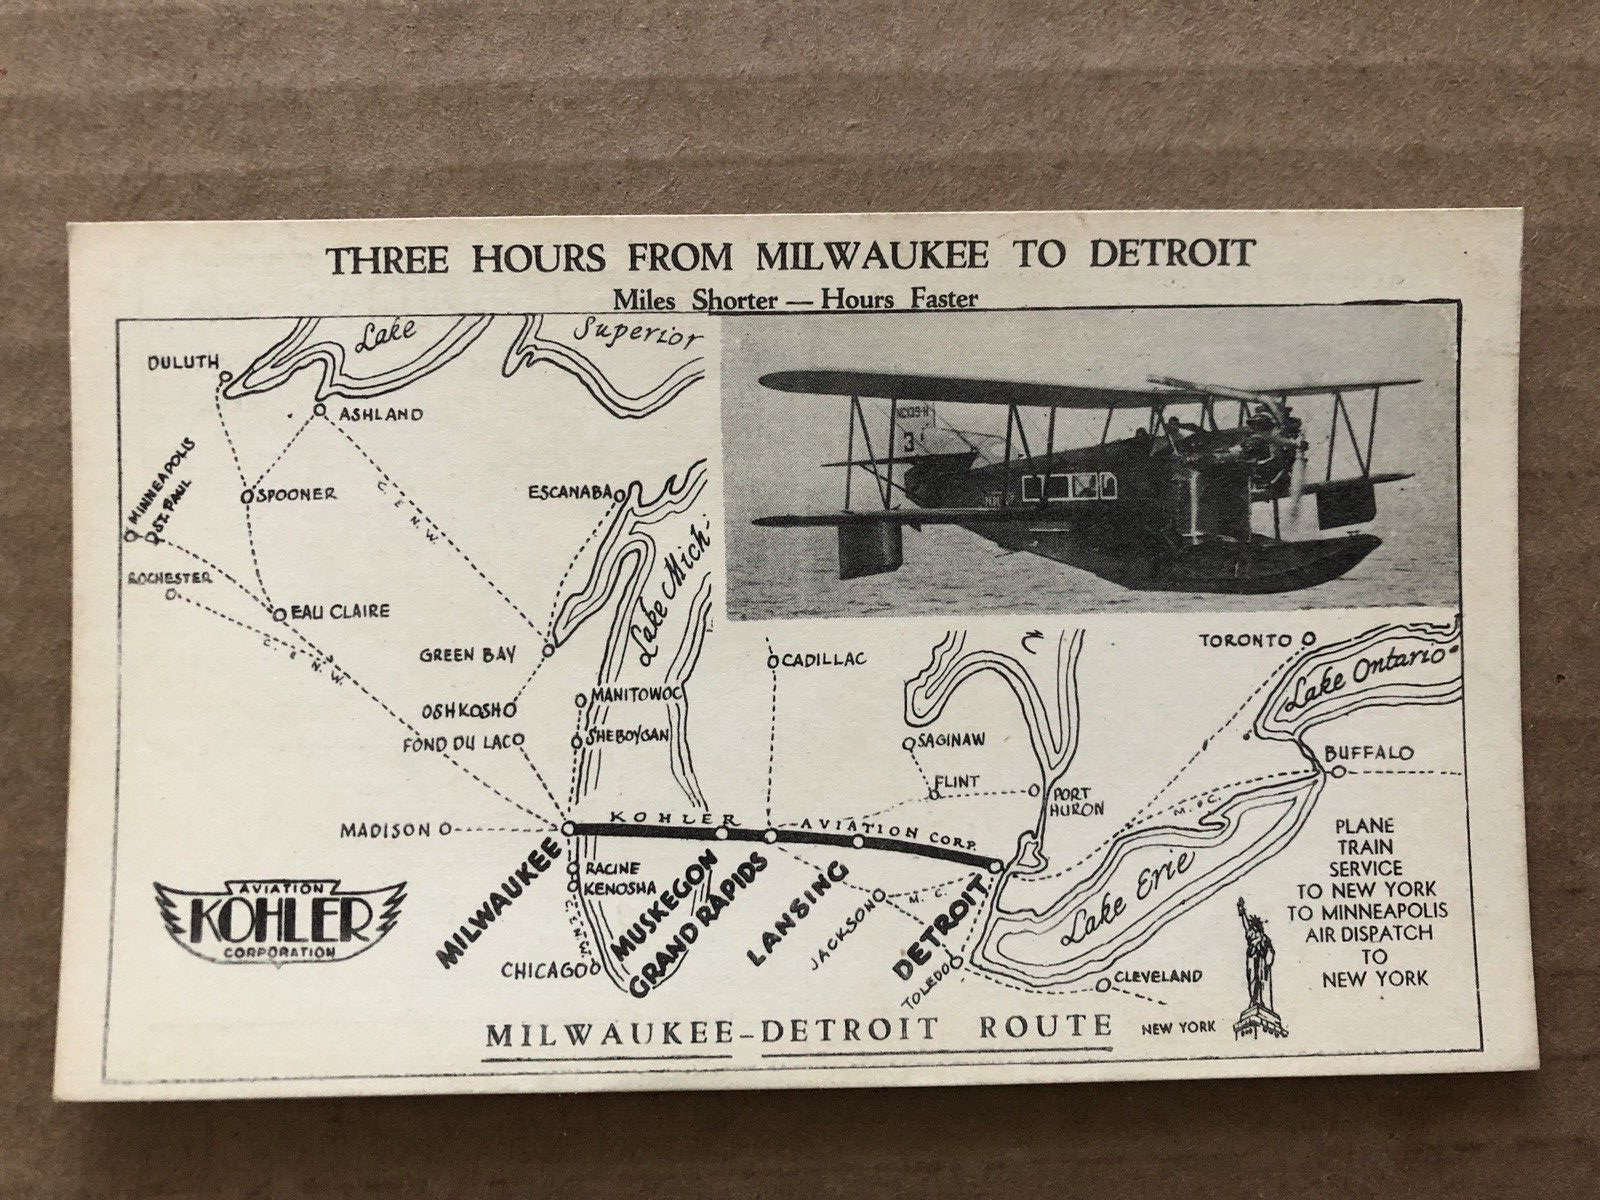 Vintage KOHLER AVIATION CORPORATION Postcard Milwaukee to Detroit